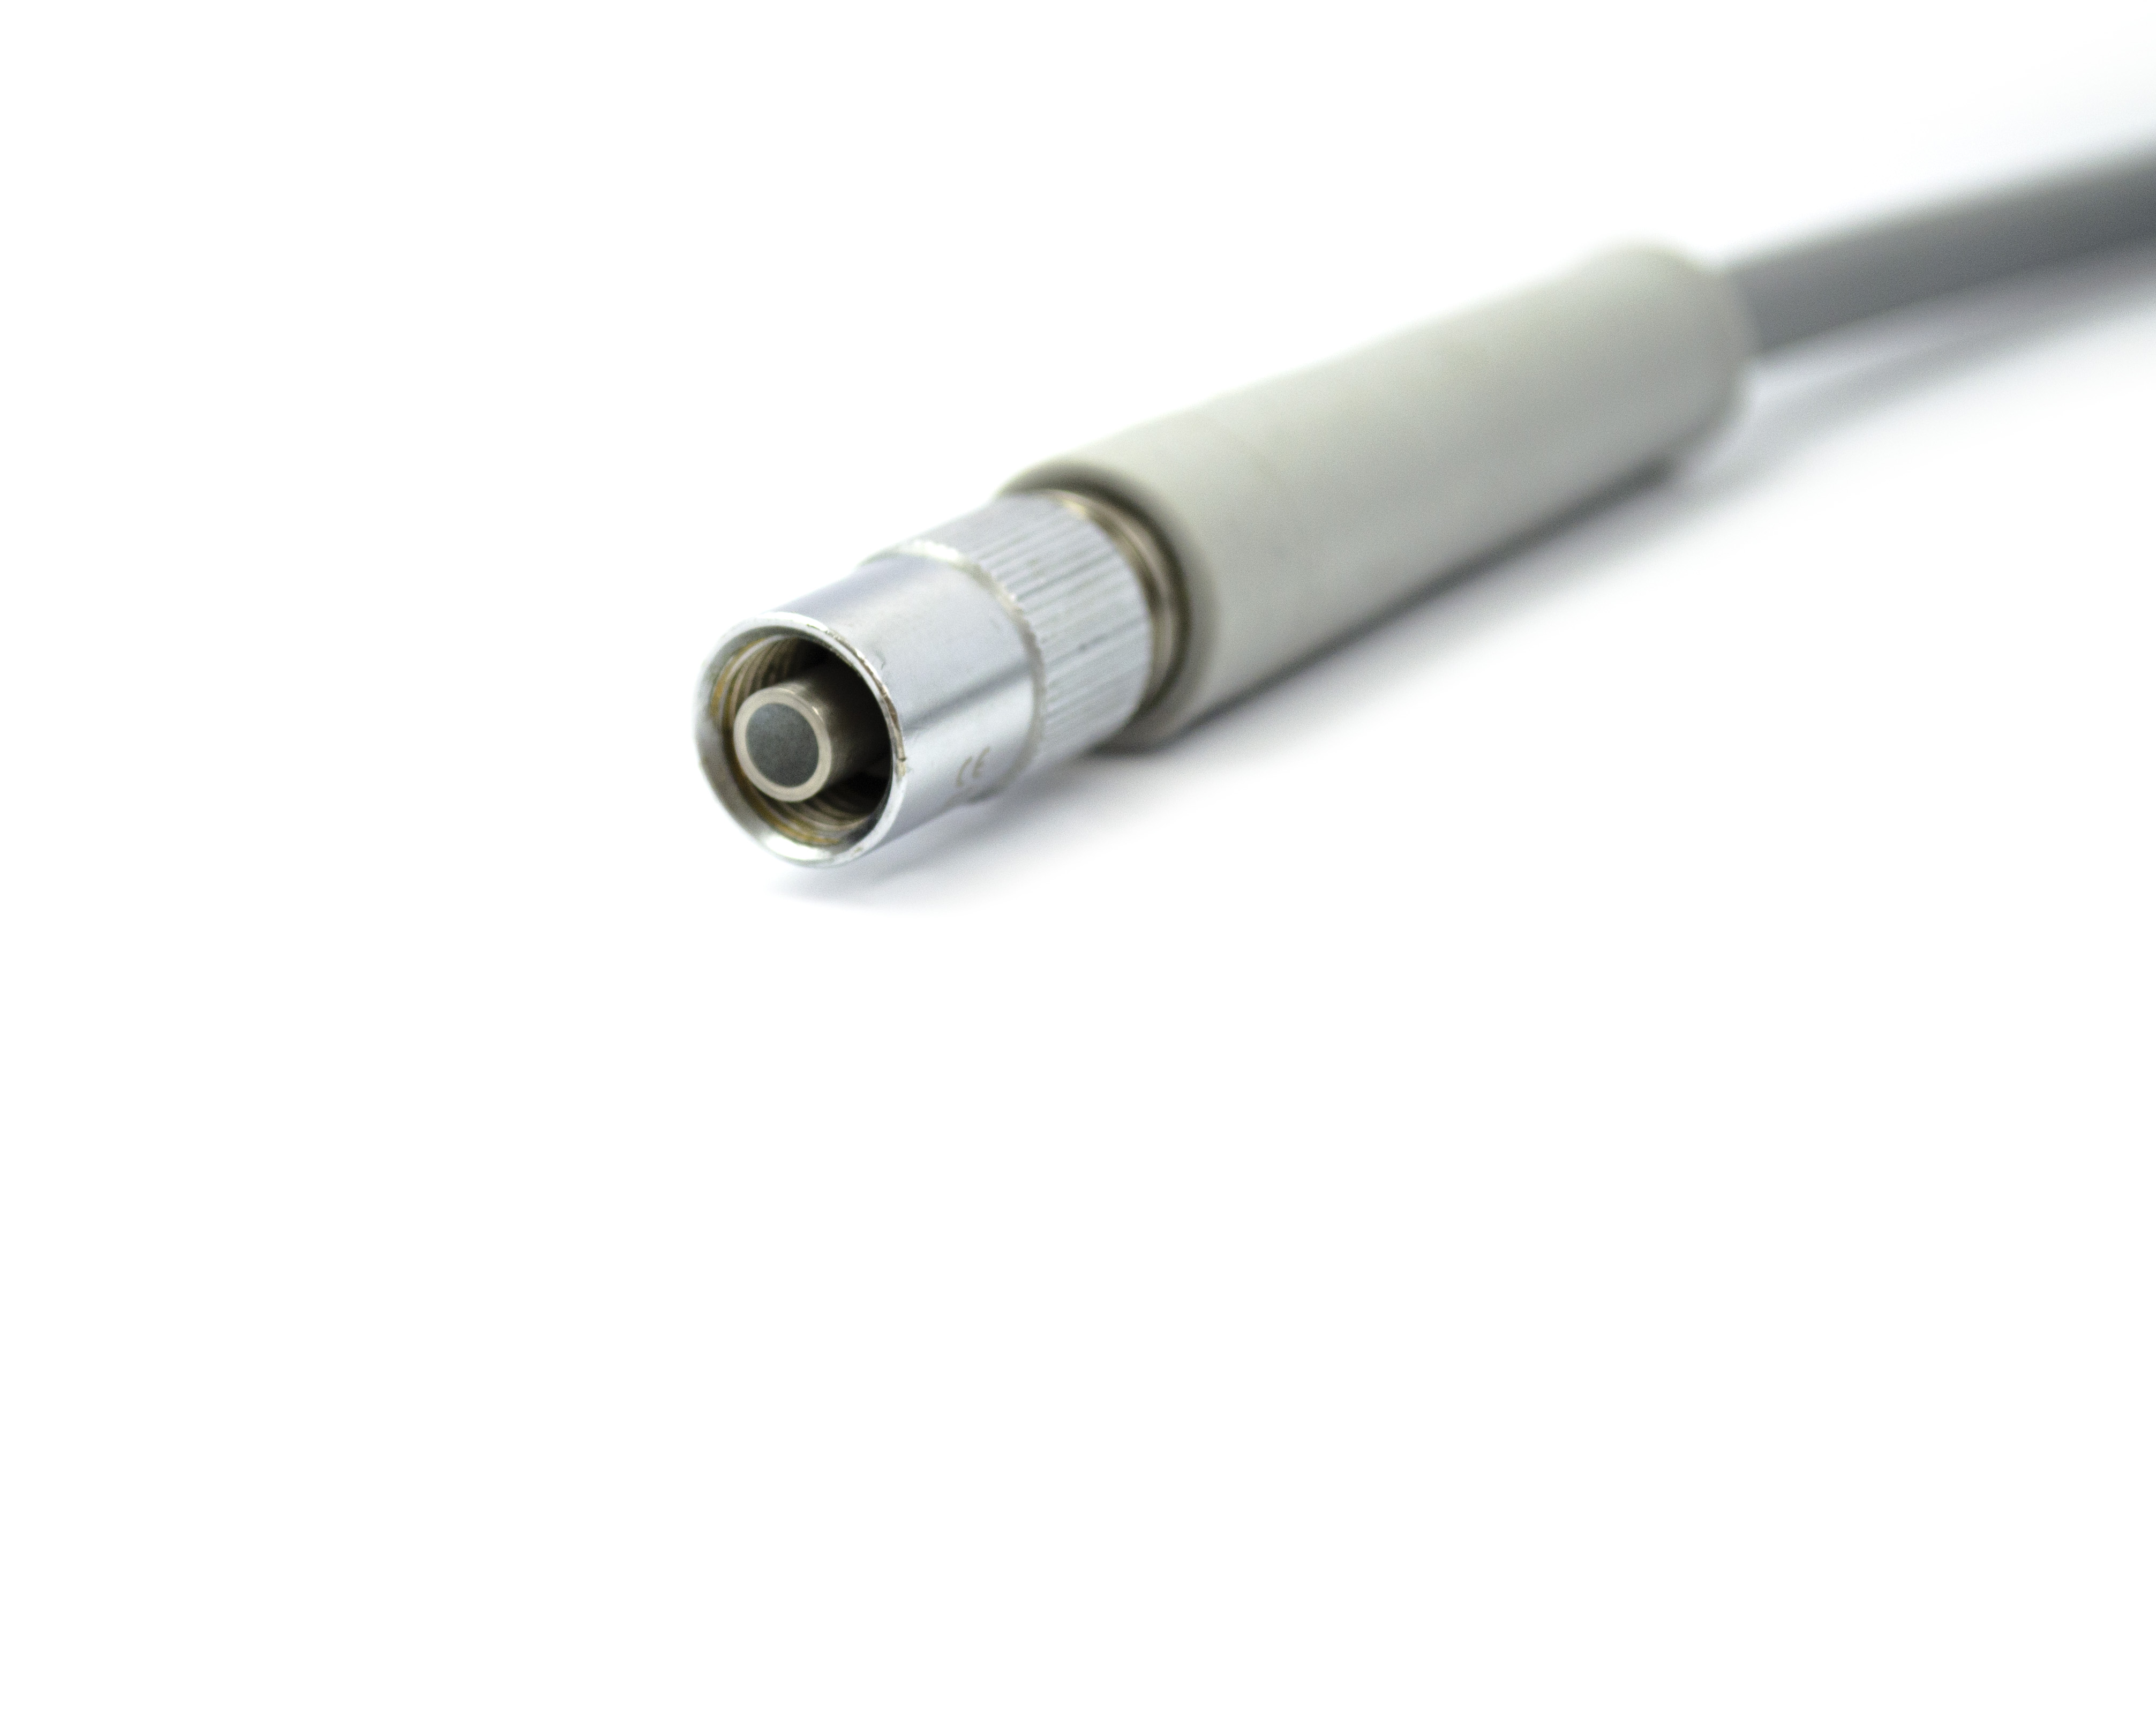 Karl Storz Fiber Optic Light Guide Cable - 495ND